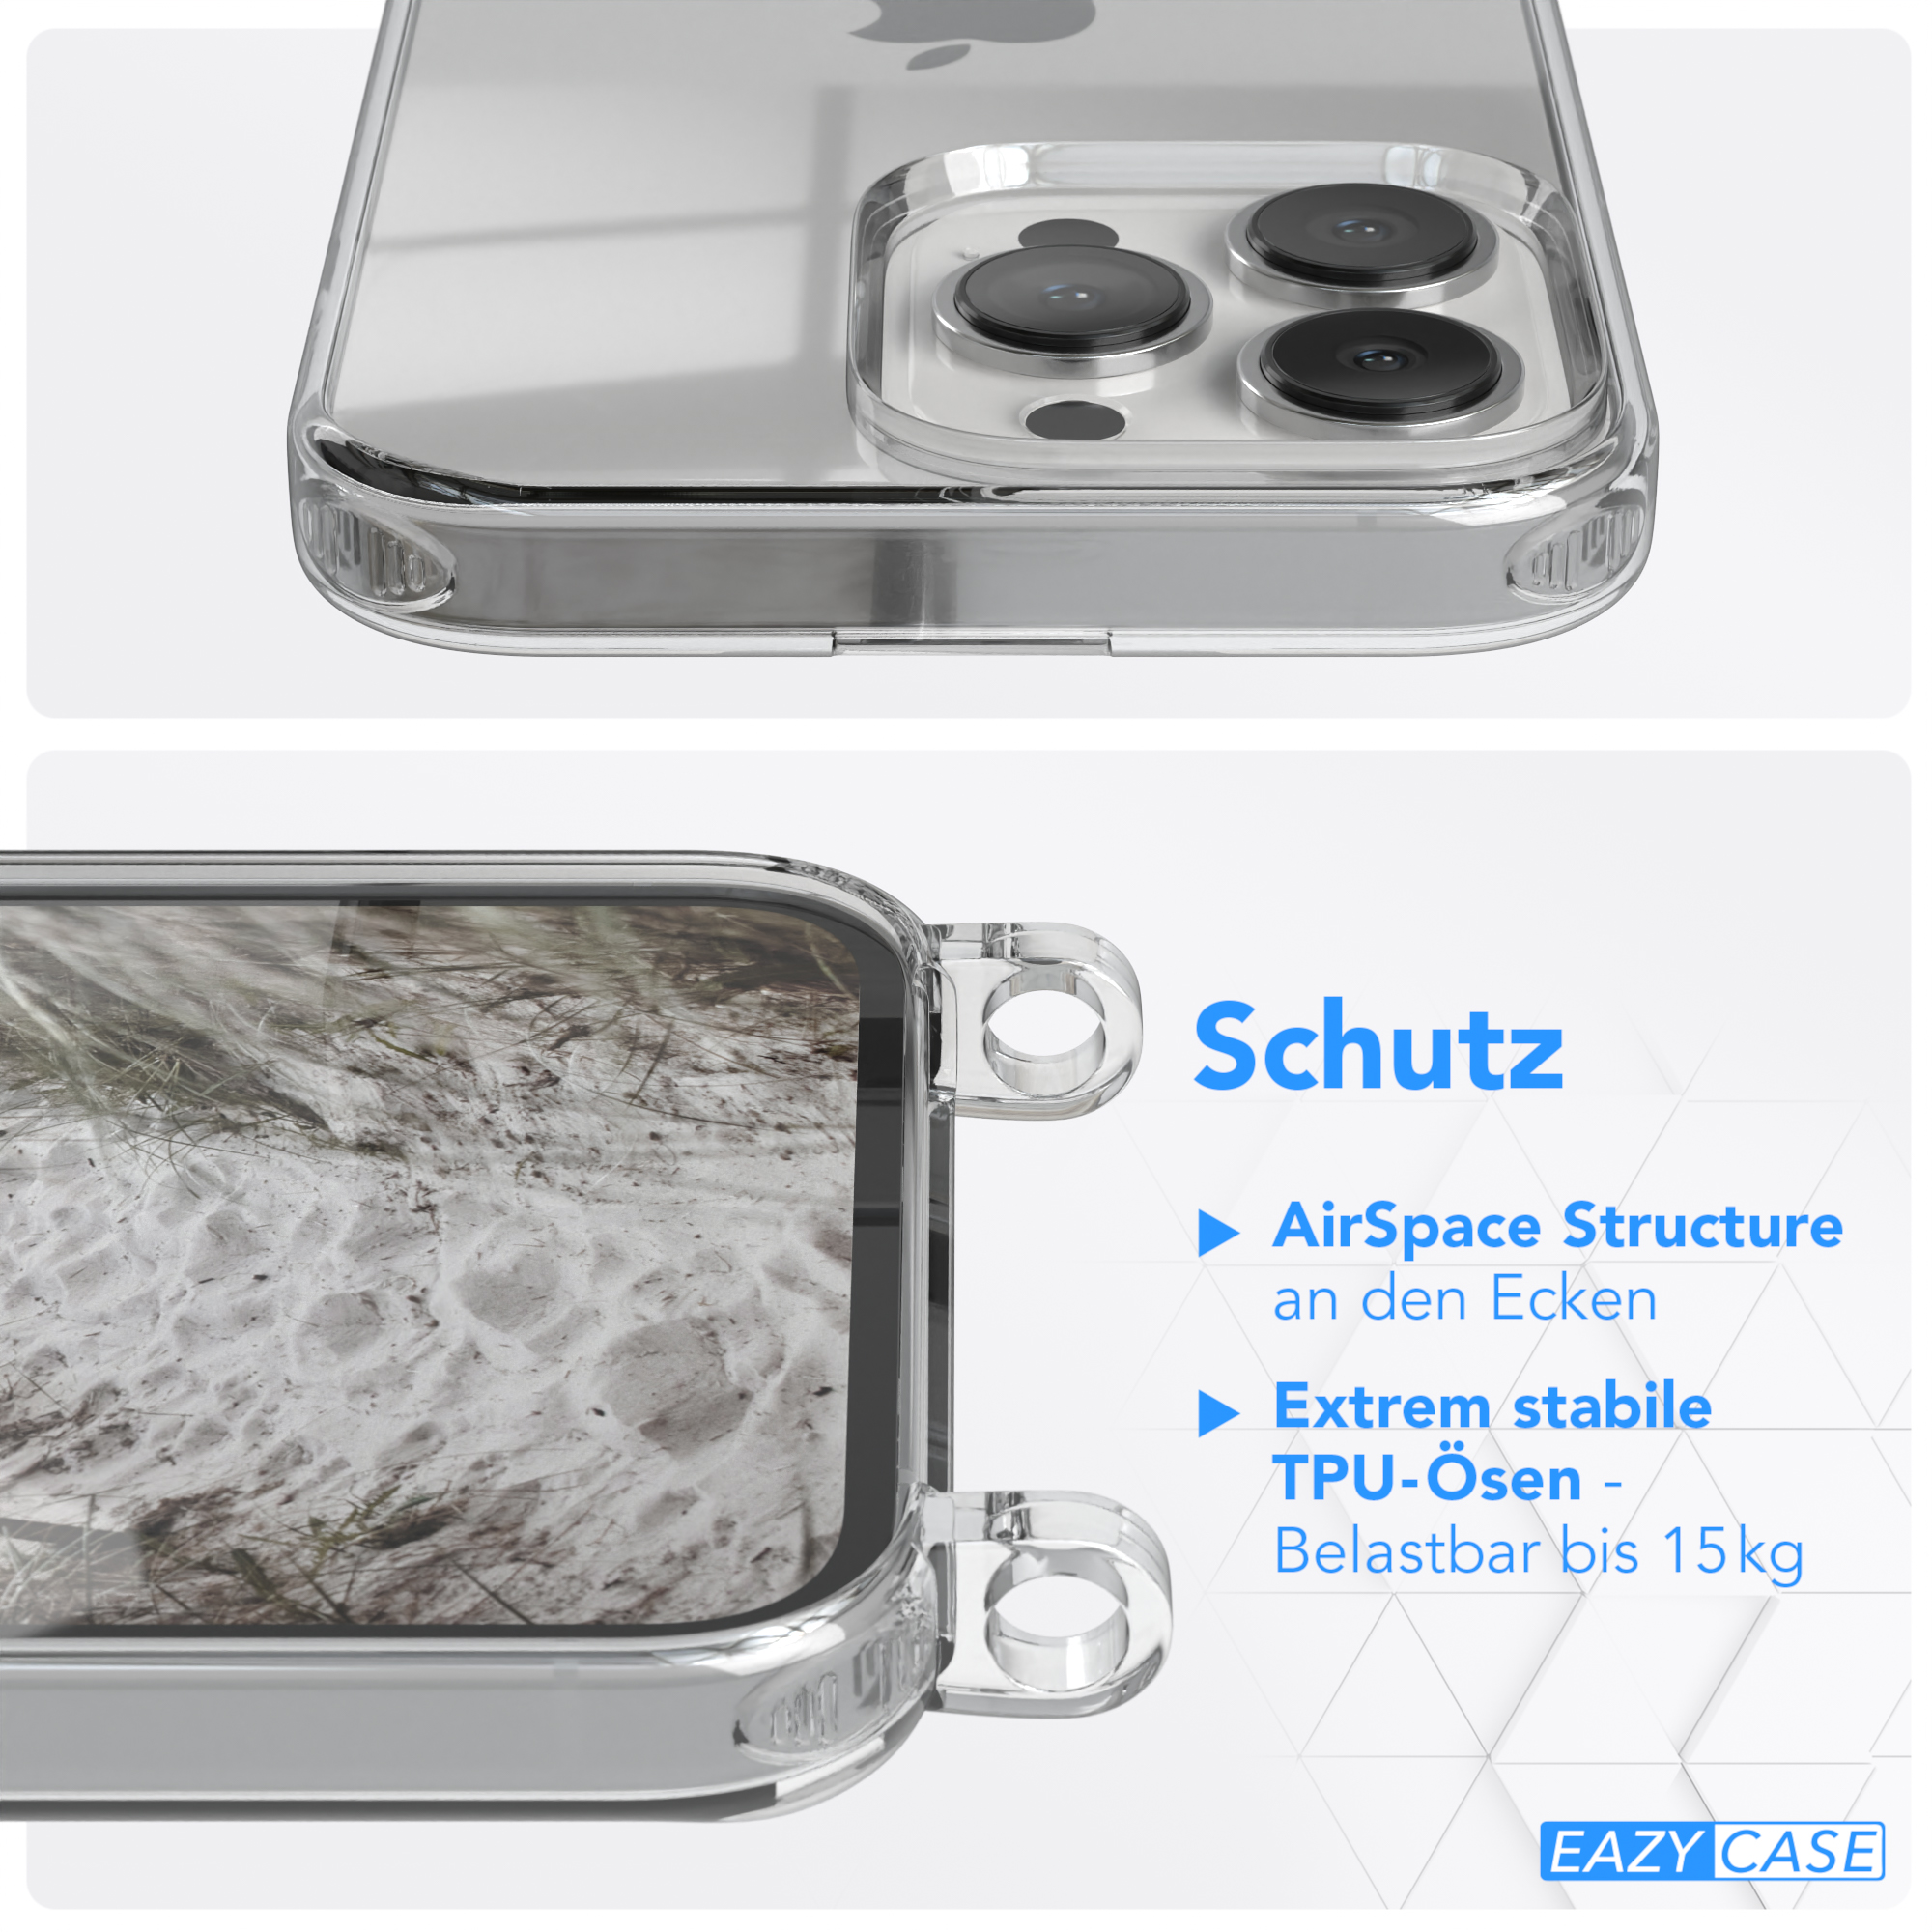 EAZY CASE Transparente Beige Kette Grau Apple, unifarbend, runder / 13 iPhone Pro, mit Umhängetasche, Taupe Handyhülle